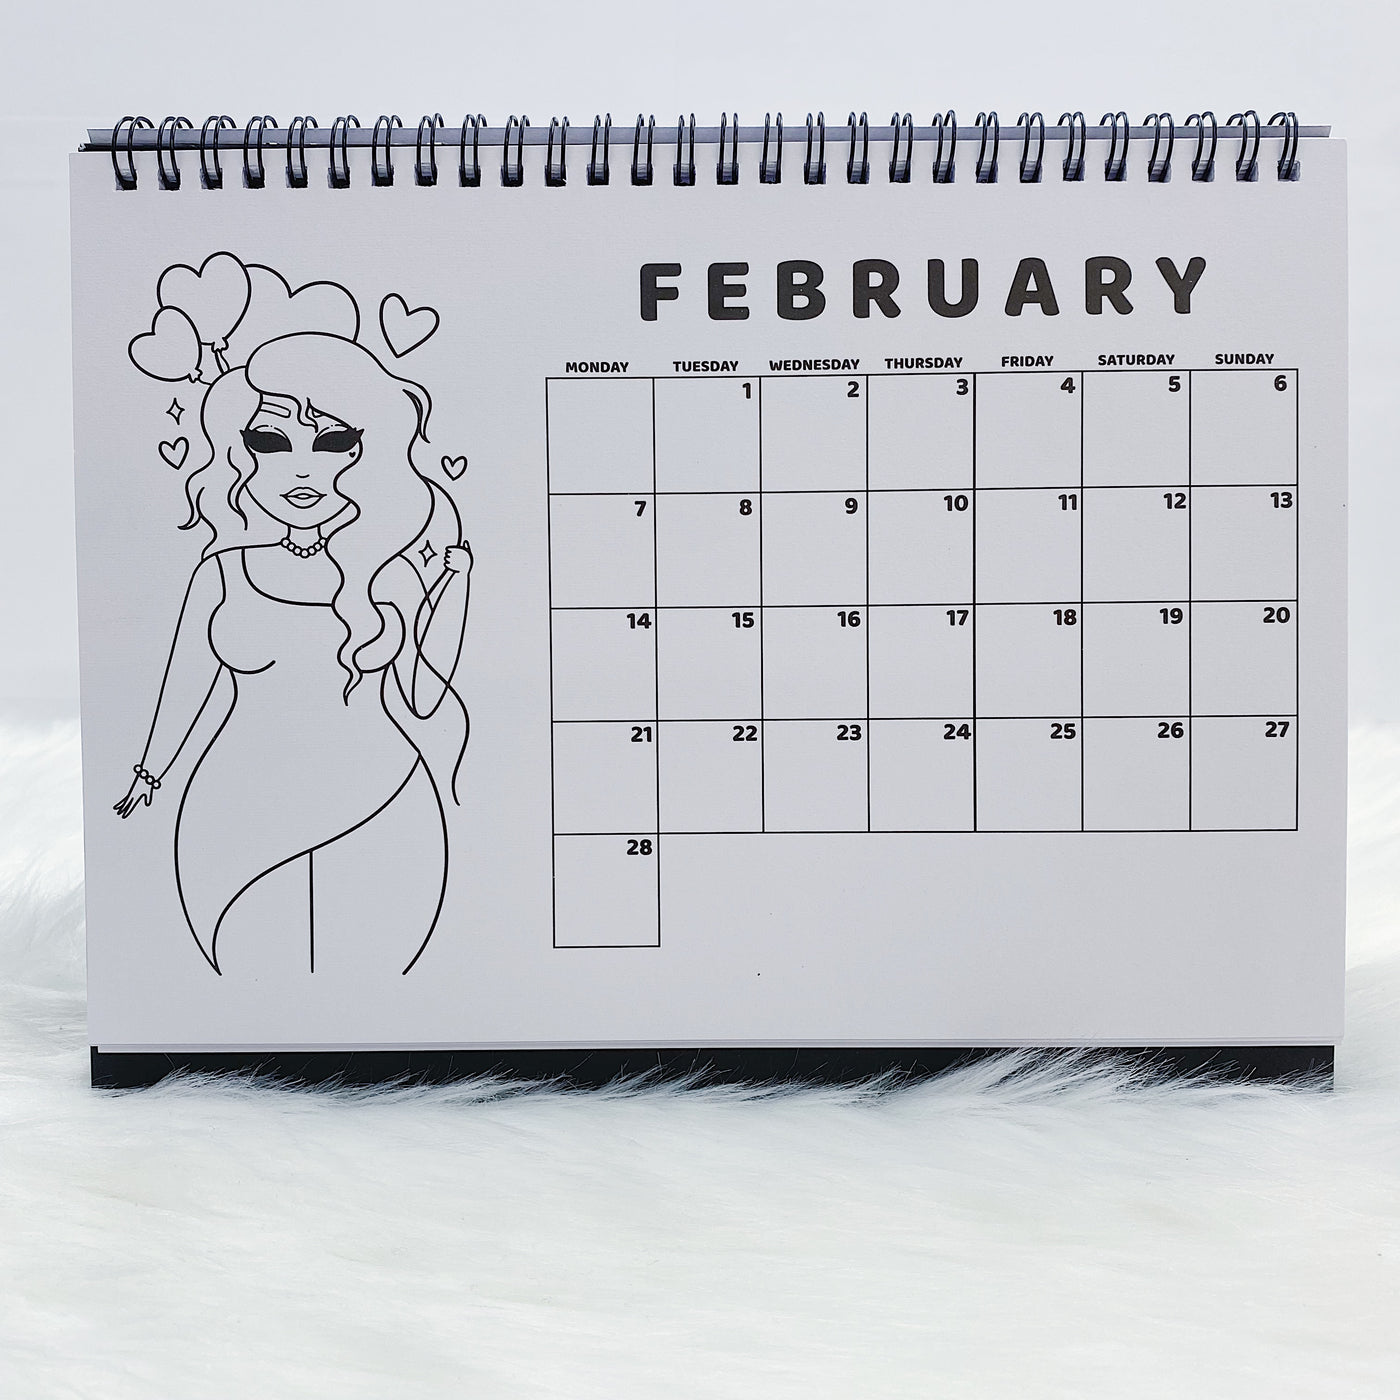 2022 Babe Spiral Desk Calendar | Jan-Dec 2022